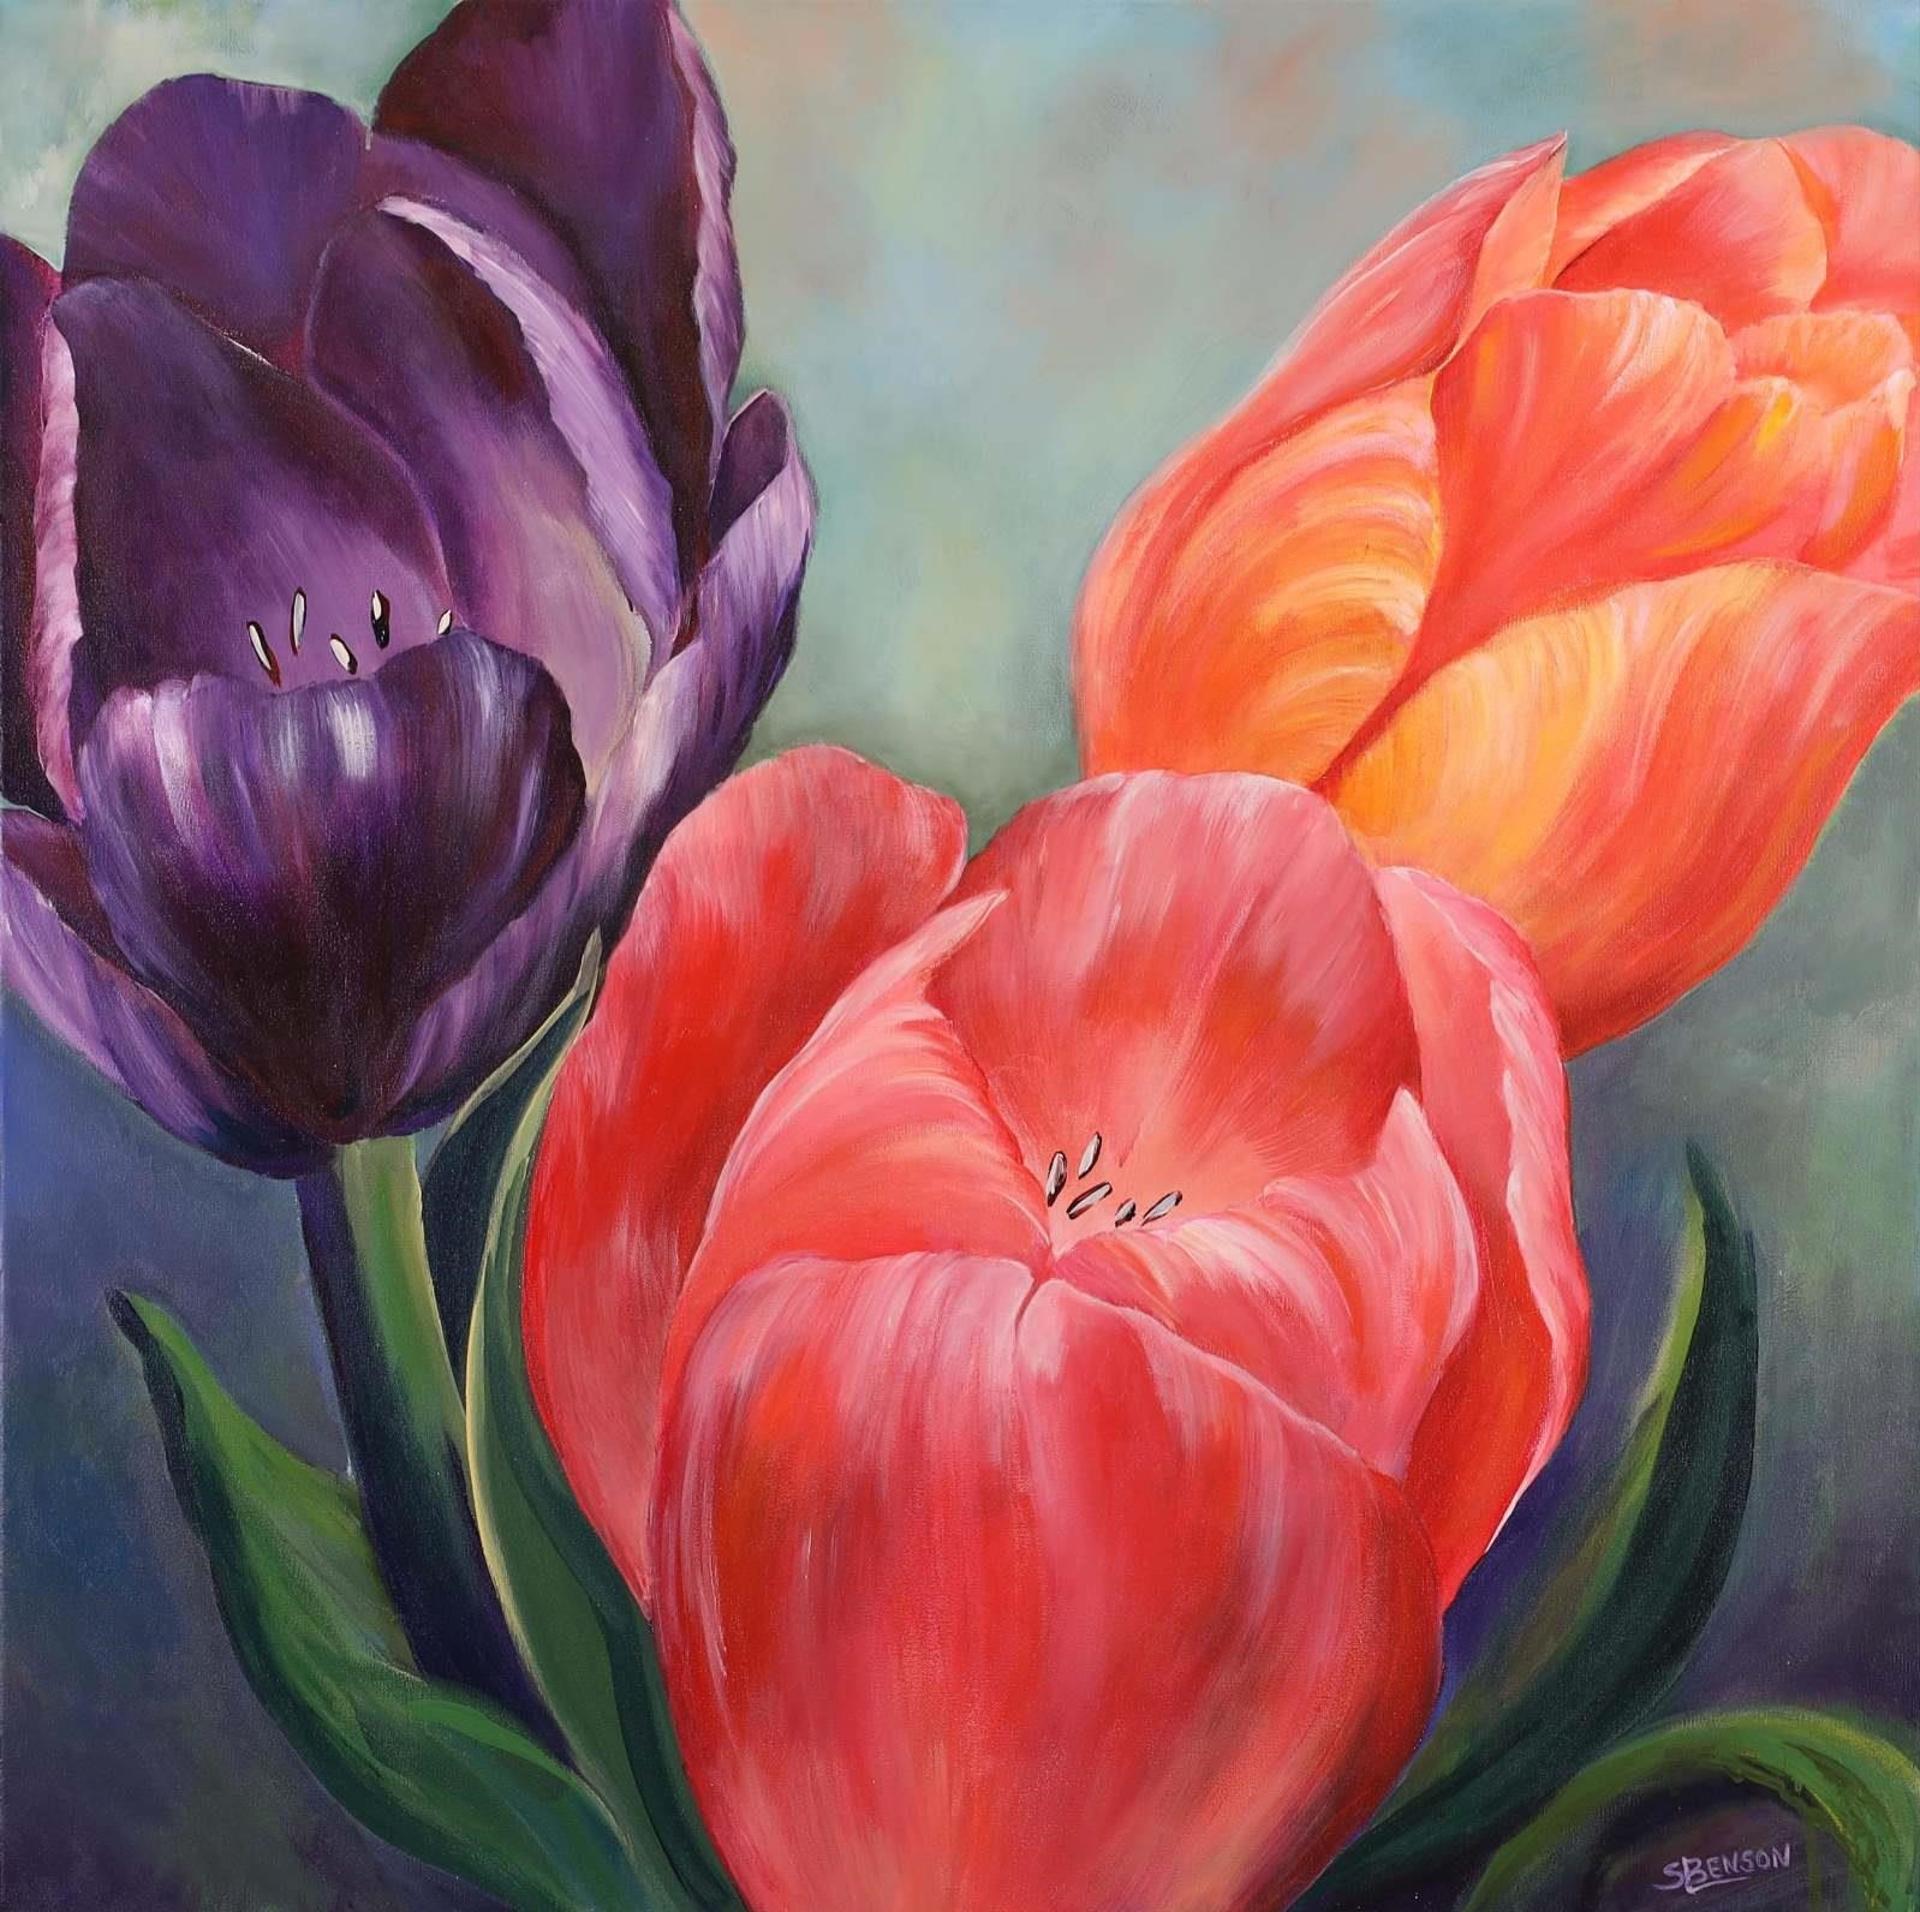 S. Benson - Untitled, Tulips